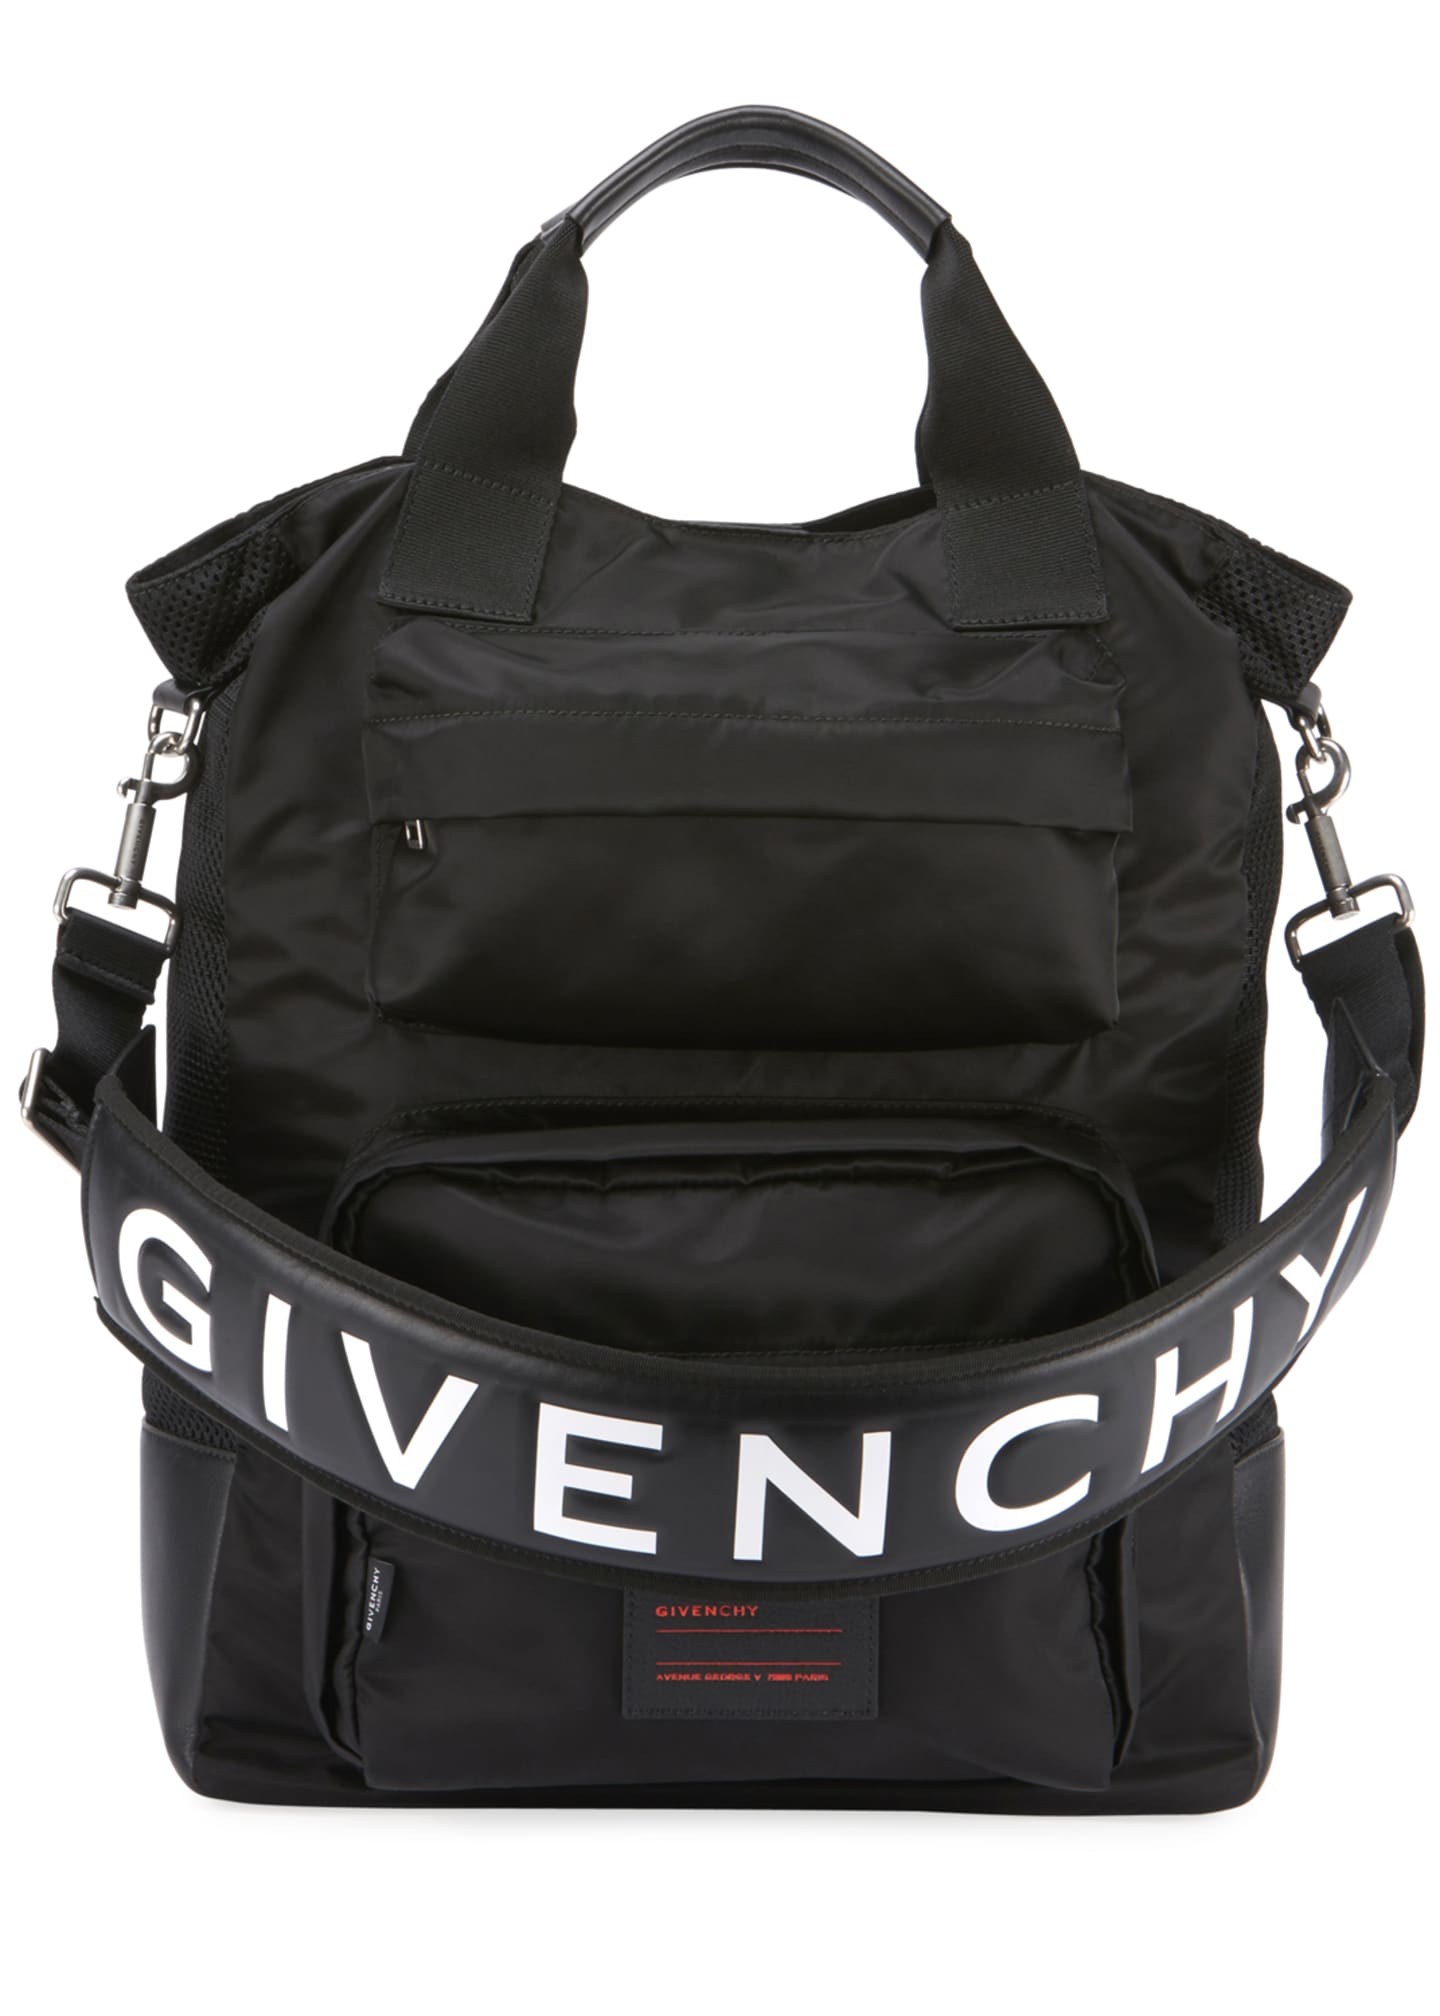 Givenchy Men's UT3 Nylon Tote Bag - Bergdorf Goodman